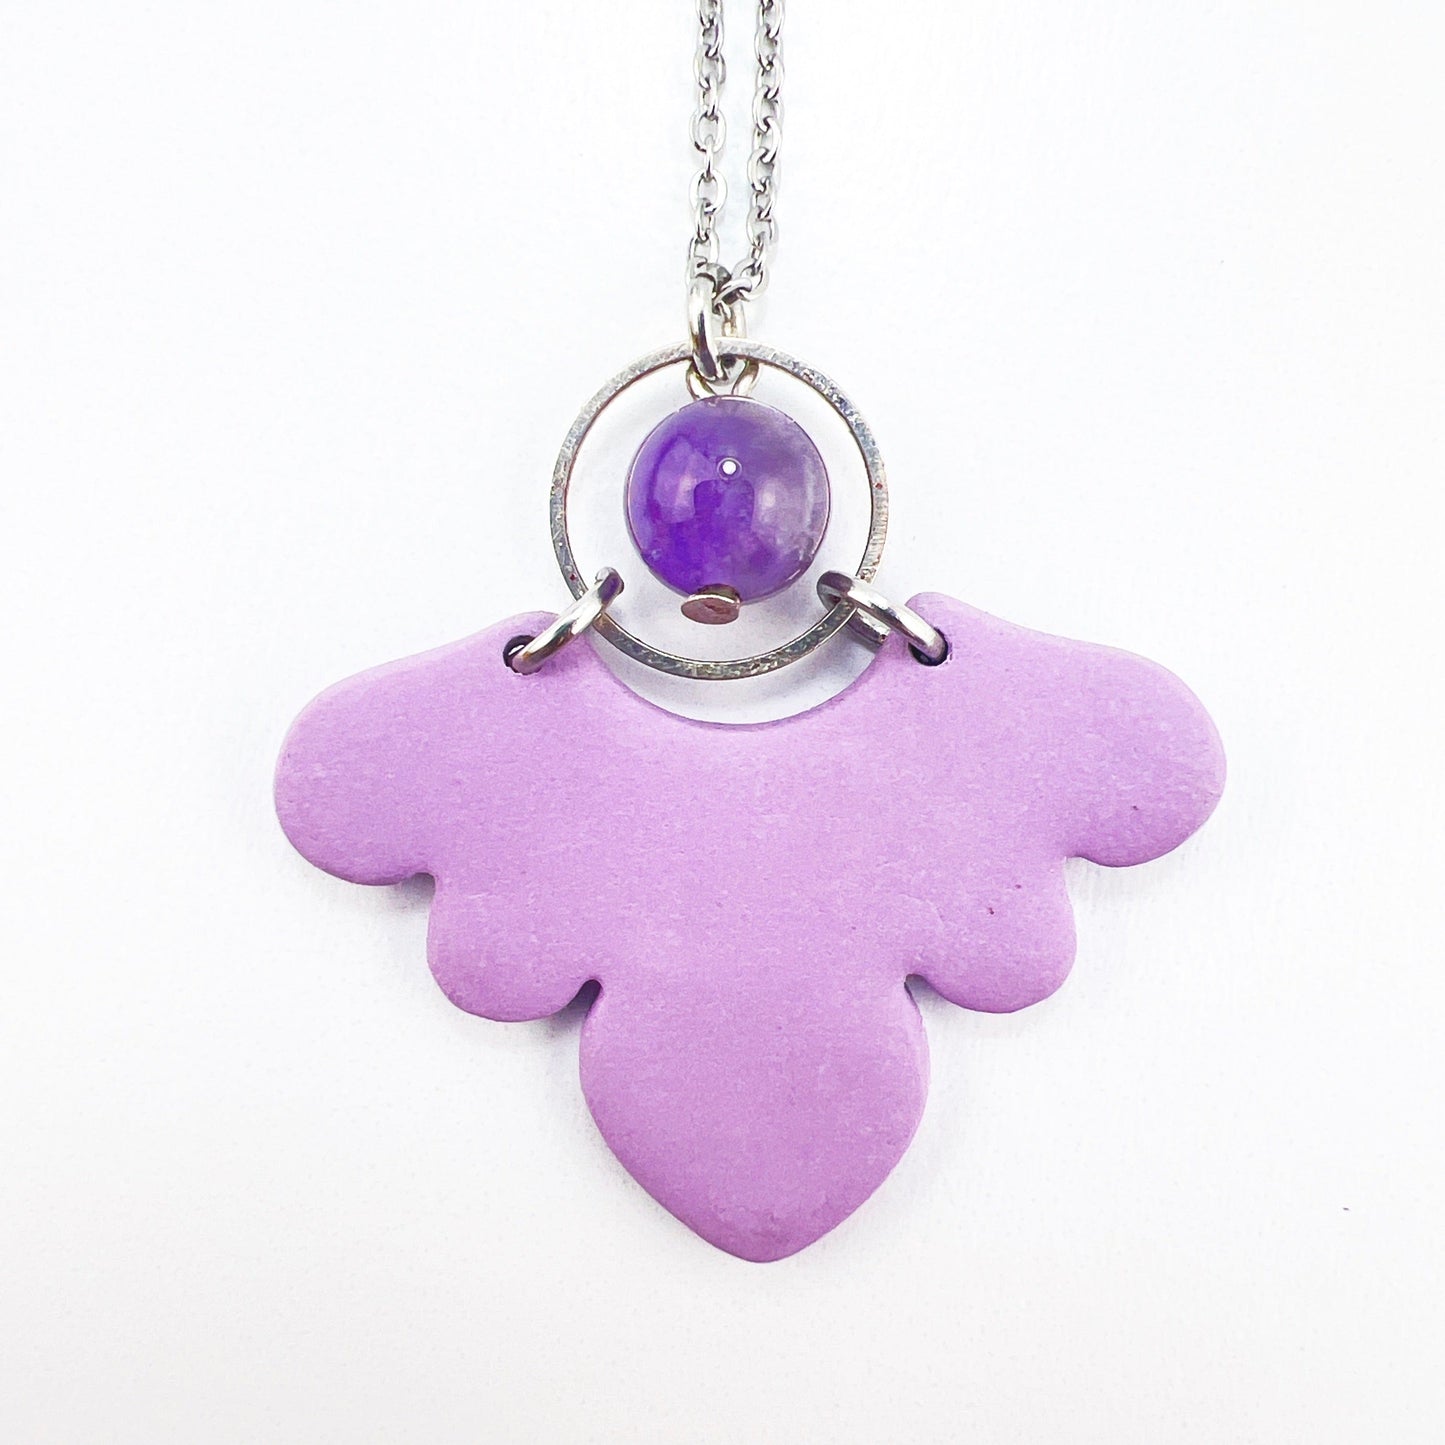 Necklace Purple Scallop & Silver Circle Necklace